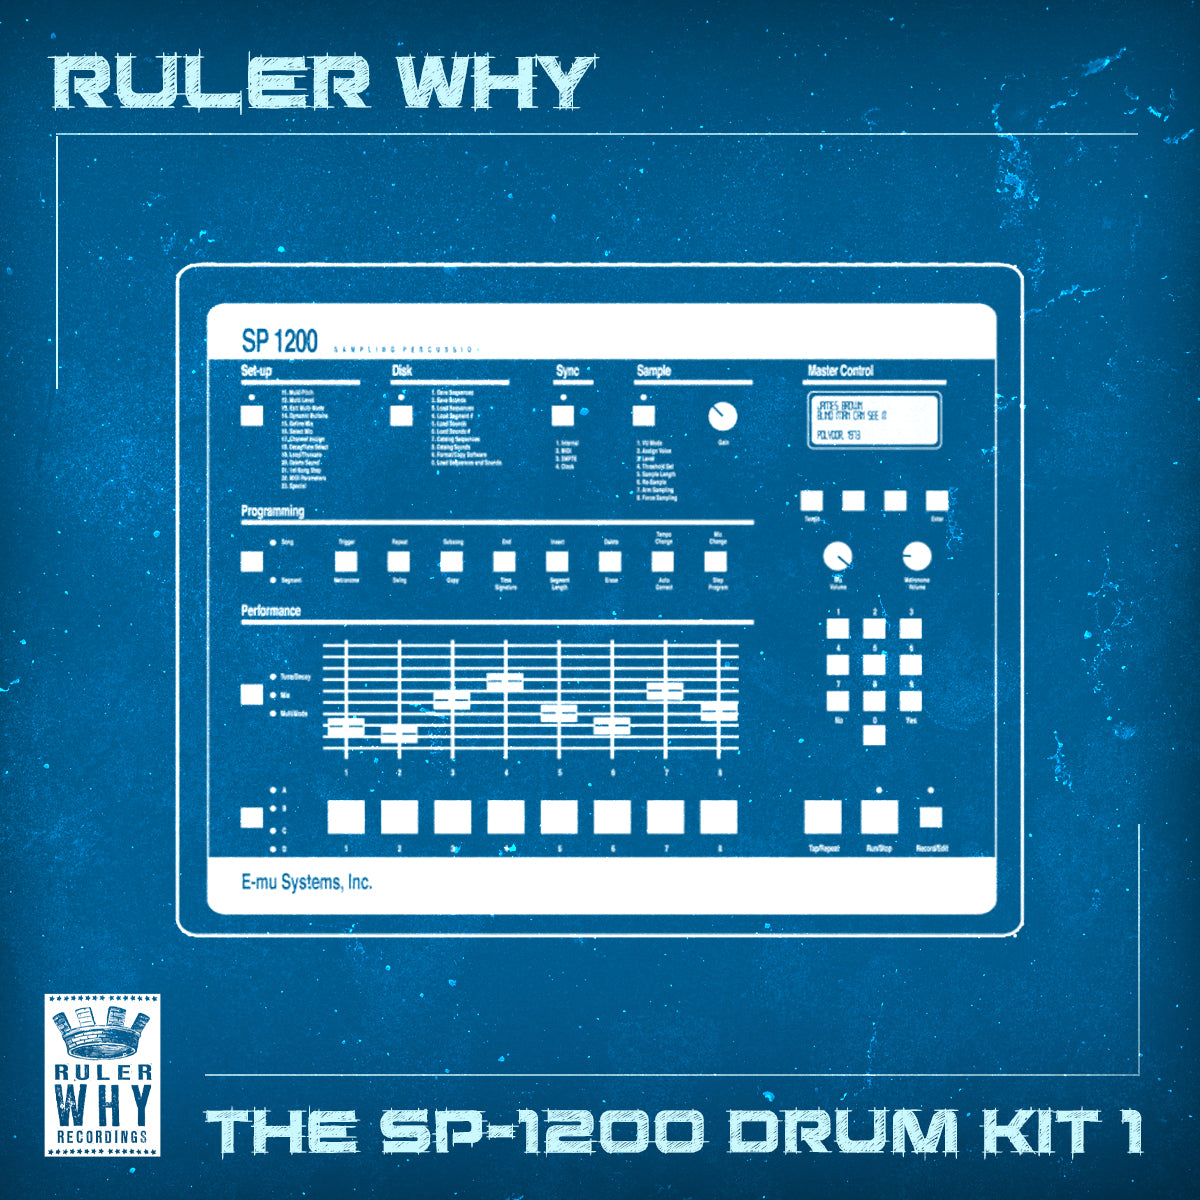 The SP1200 Drum Kit 1